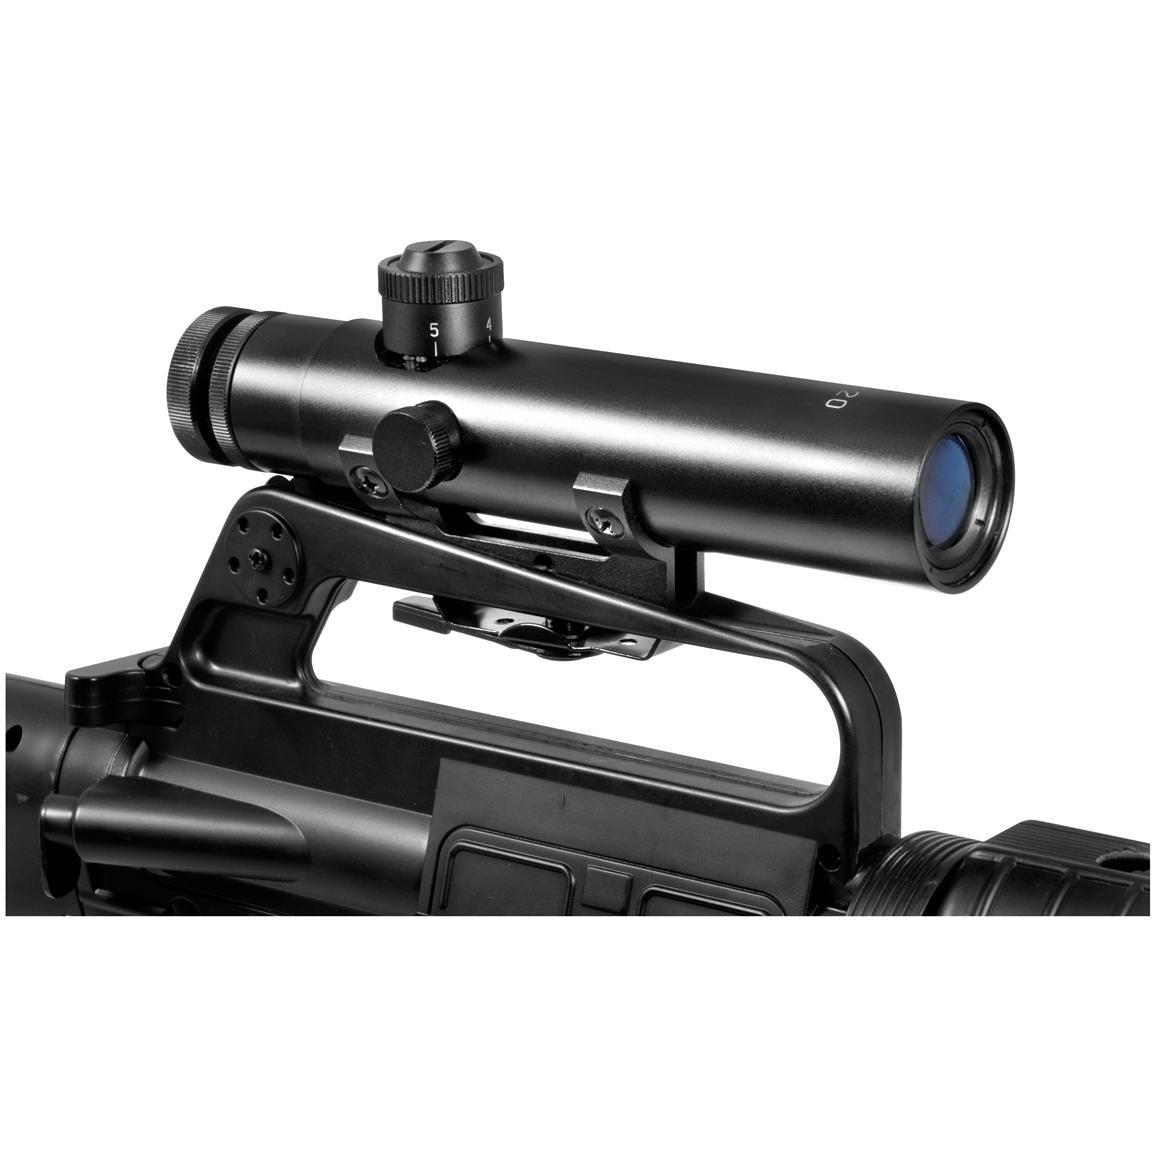 Barska 4x20 Mm M16 Electro Sight Scope Matte Black 139085 Rifle